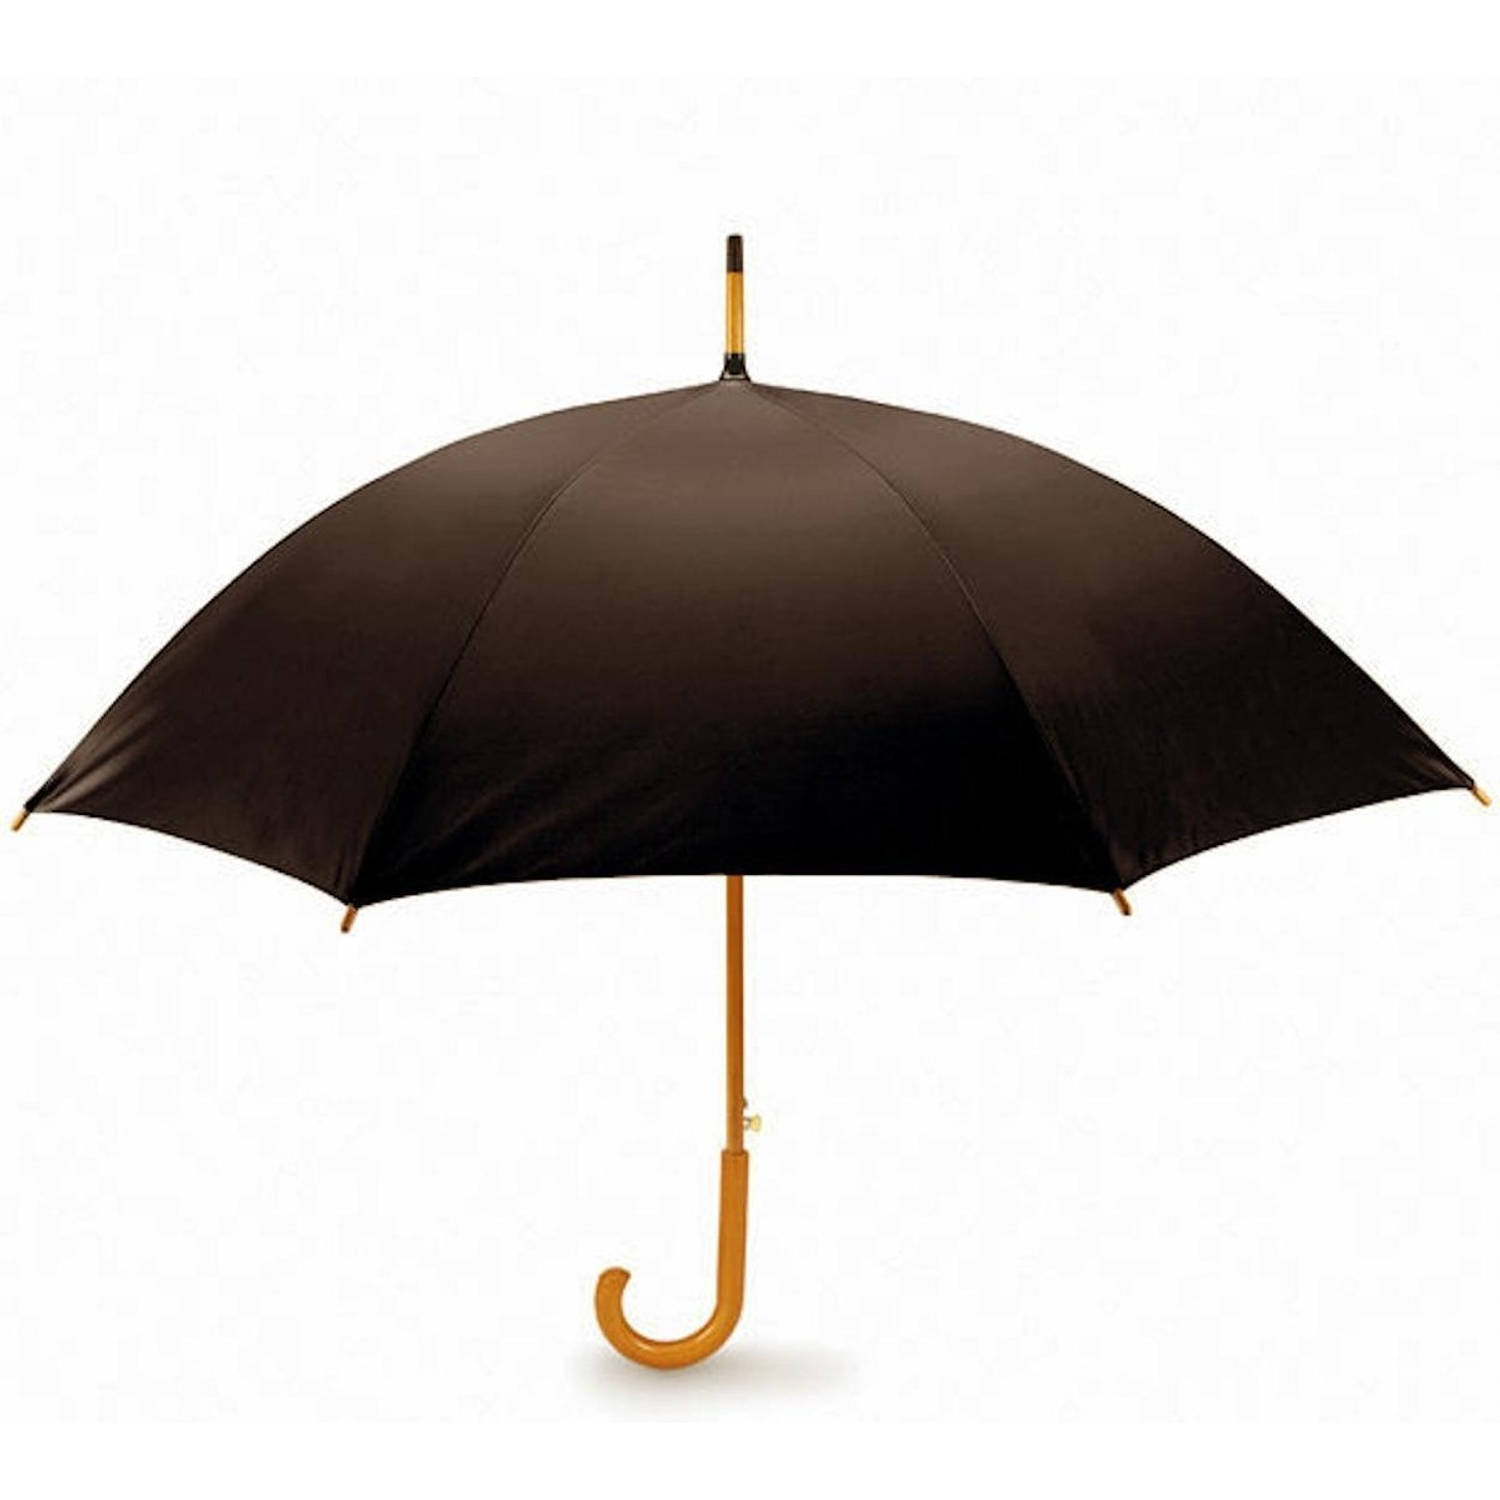 Storm - Stormparaplu - Paraplu met houten handvat - Paraplu - Houten Paraplu - Kwaliteit paraplu - Donker bruin | Blokker